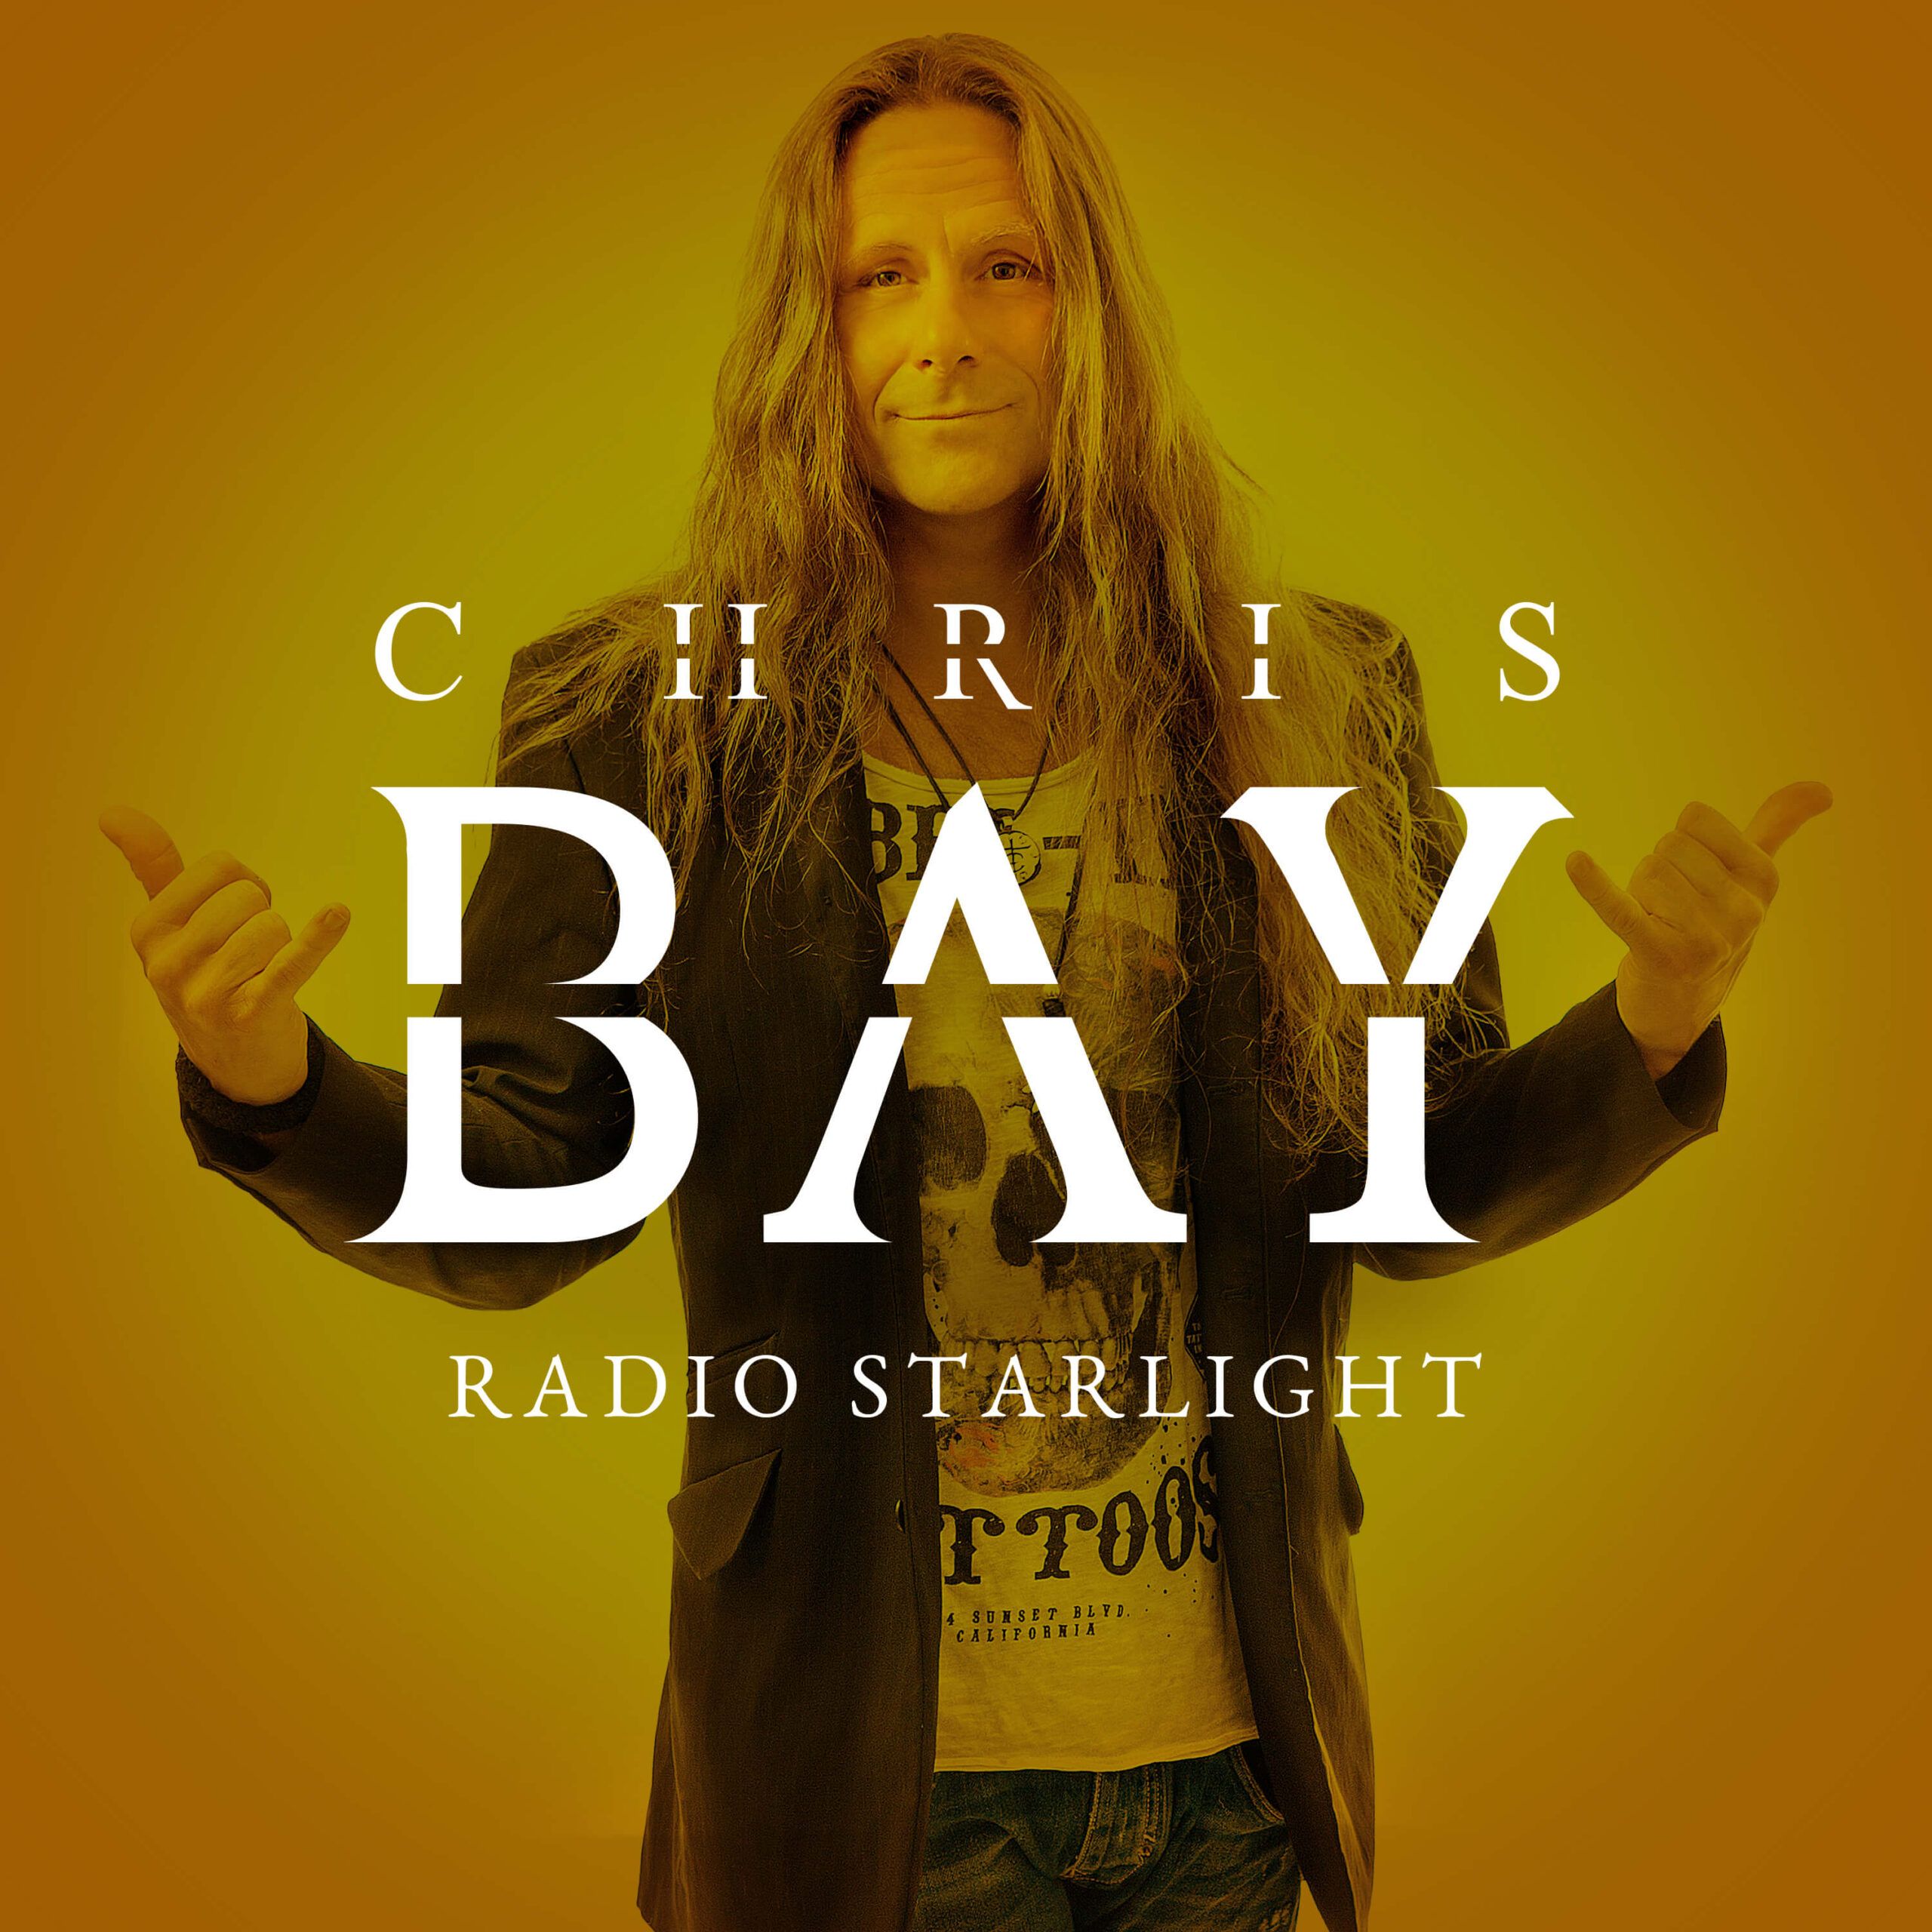 Freedom Call: Chris Bay kündigt "Chasing The Sun"-Soloalbum an